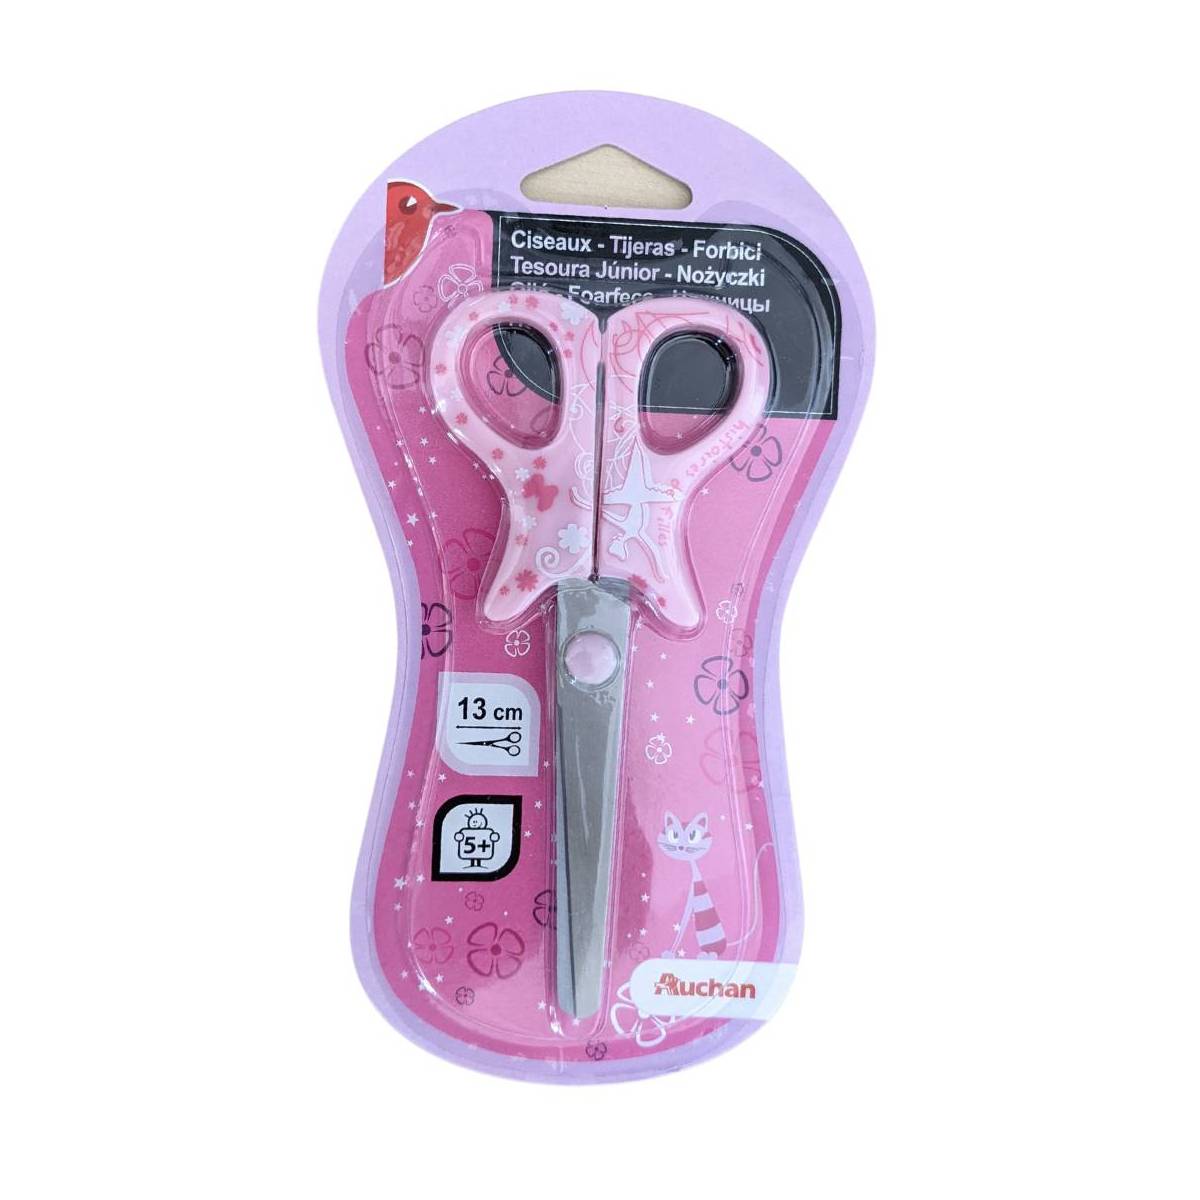 Scissors 13 cm Auchan Pink